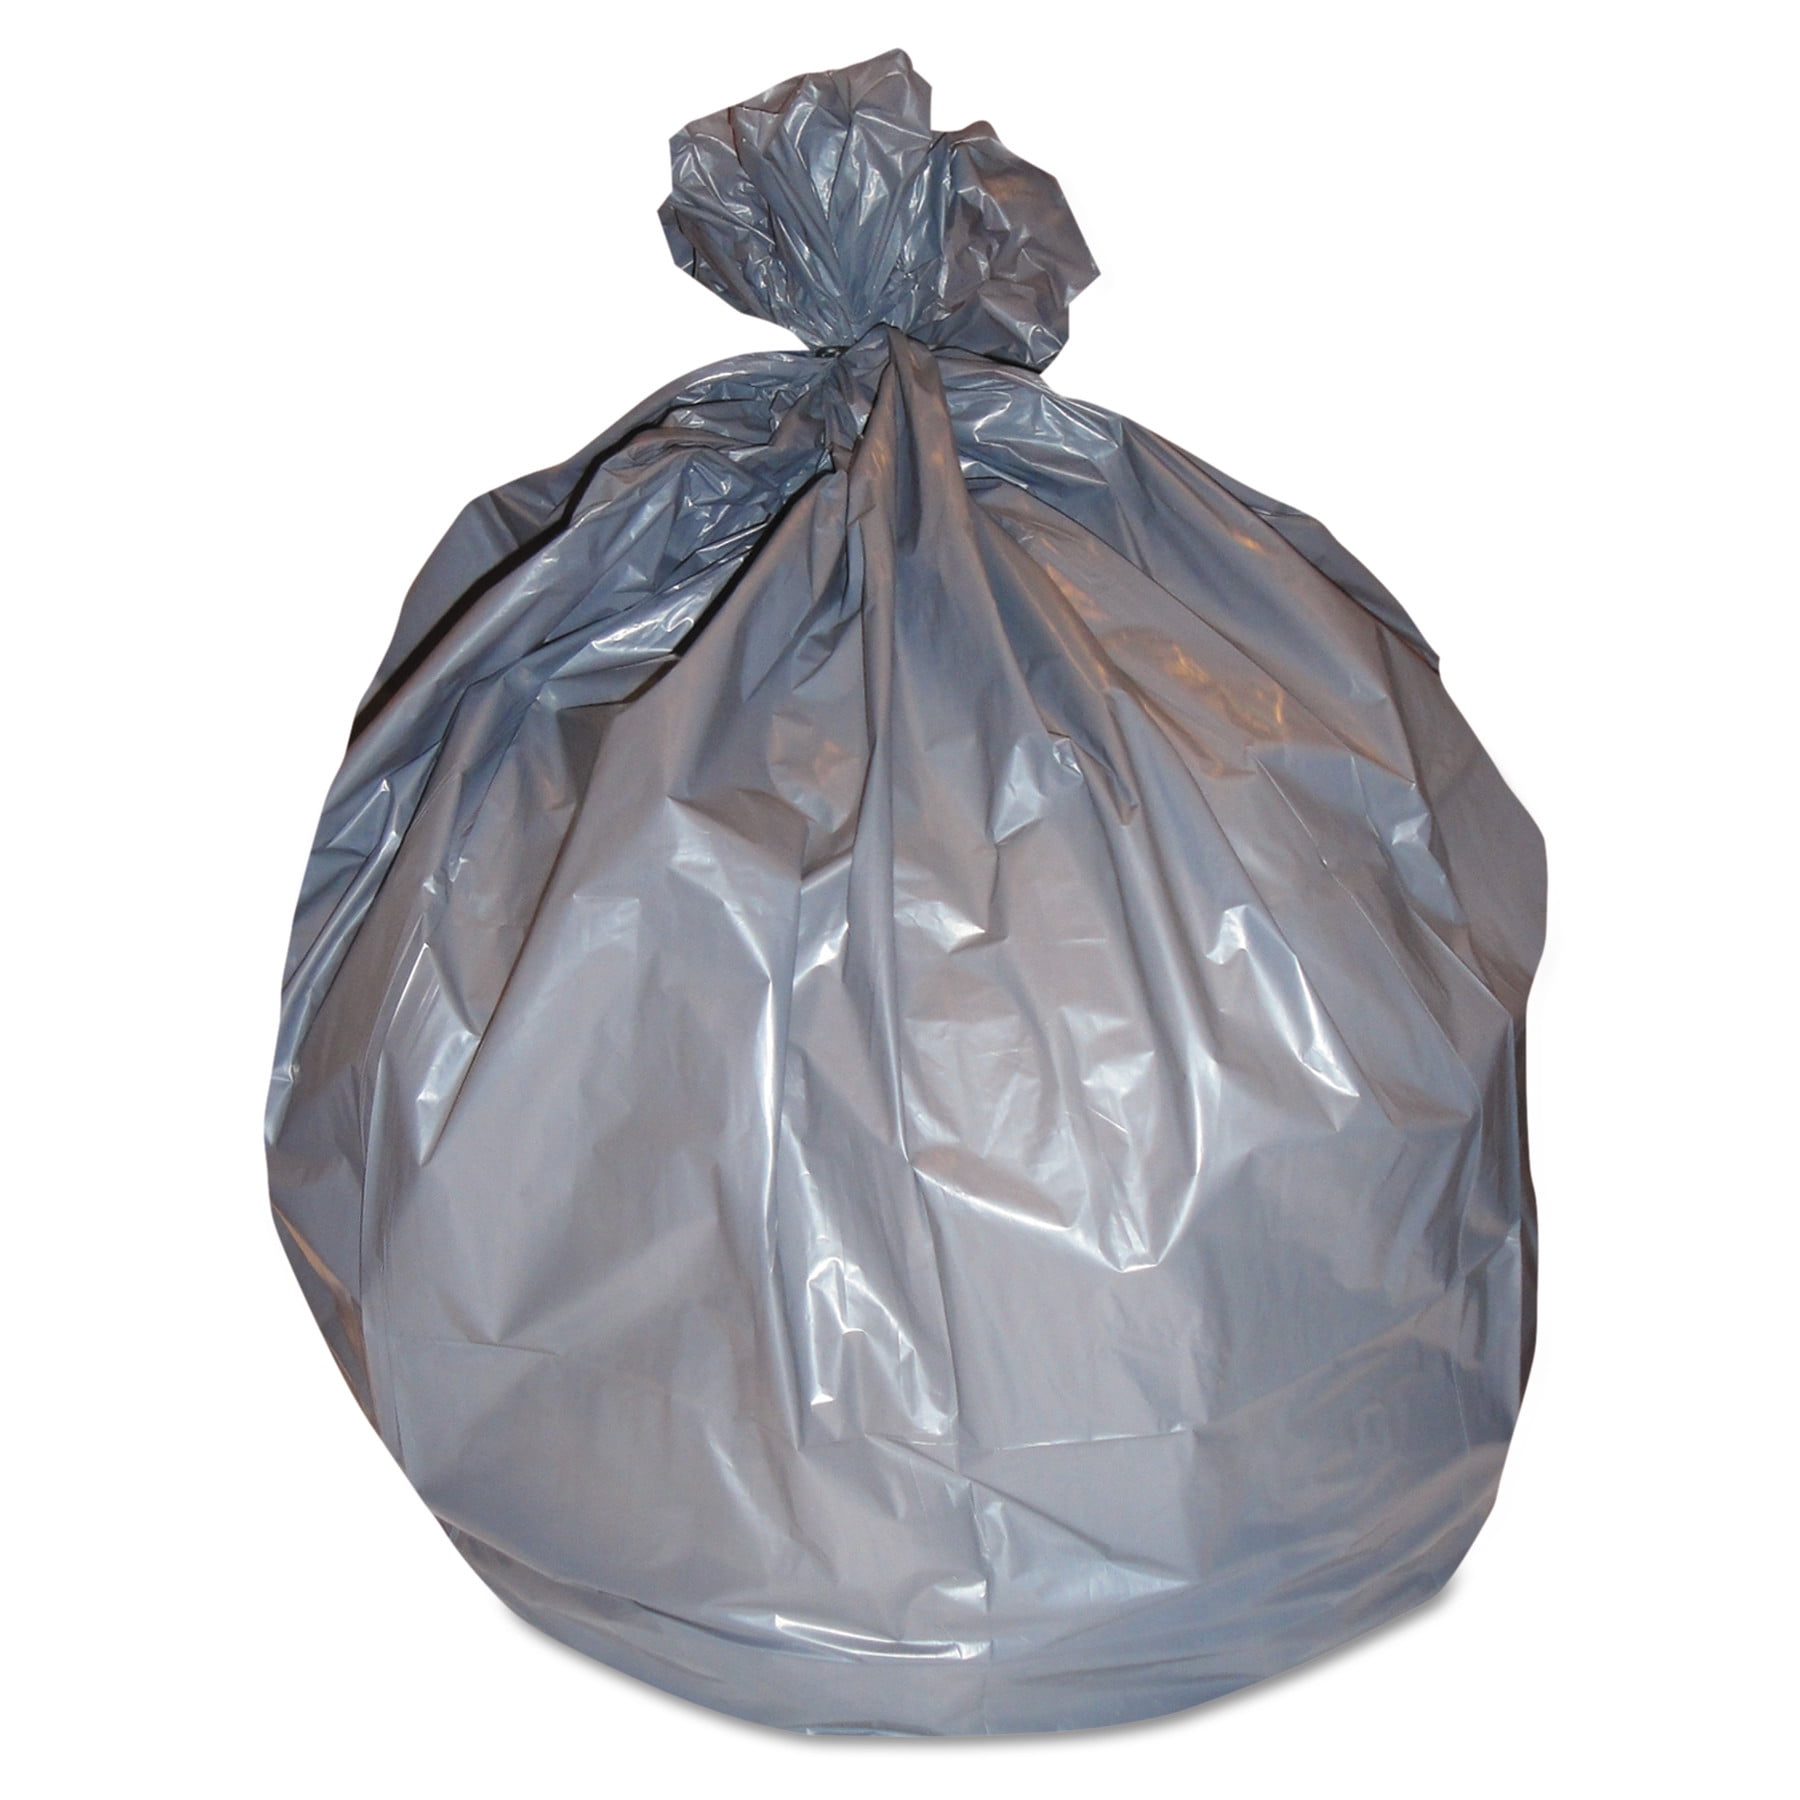 Plasticplace Green Trash Bags, 20-30 Gallon 200 / Case 1.2 Mil